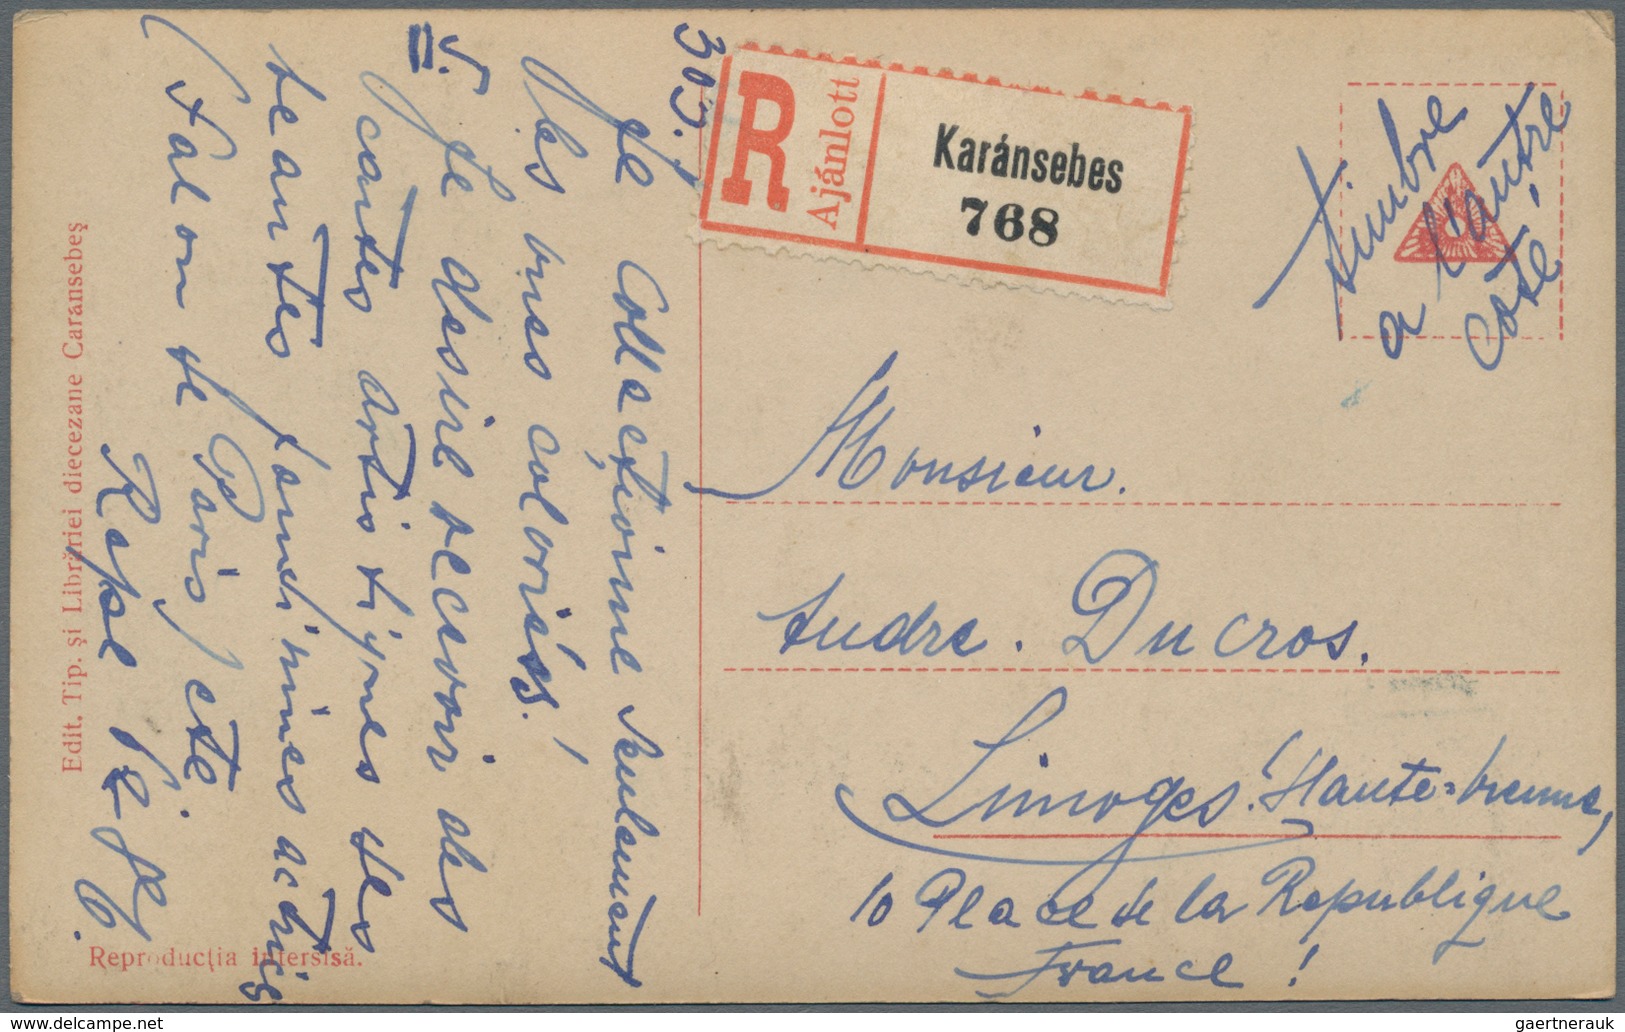 Rumänien: 1920 Picture Postcard Sent REGISTERED From Karánsebas To Limoges, France Franked On Pictur - Neufs